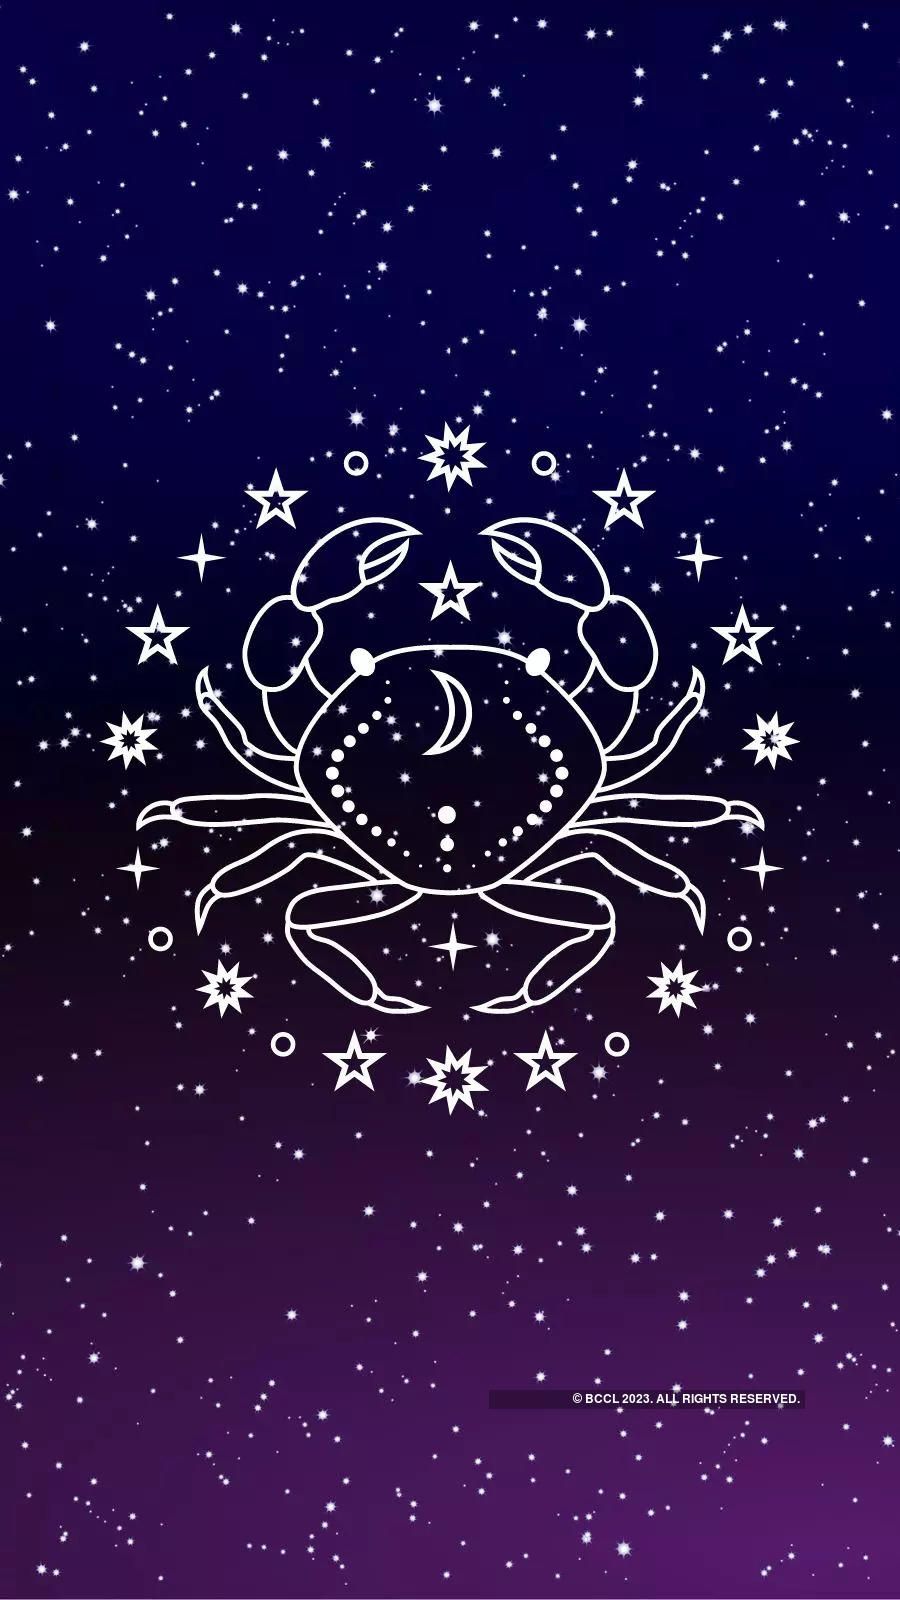 romantic zodiac signs: Pisces to Capricorn: Most romantic zodiac signs ranked. EconomicTimes